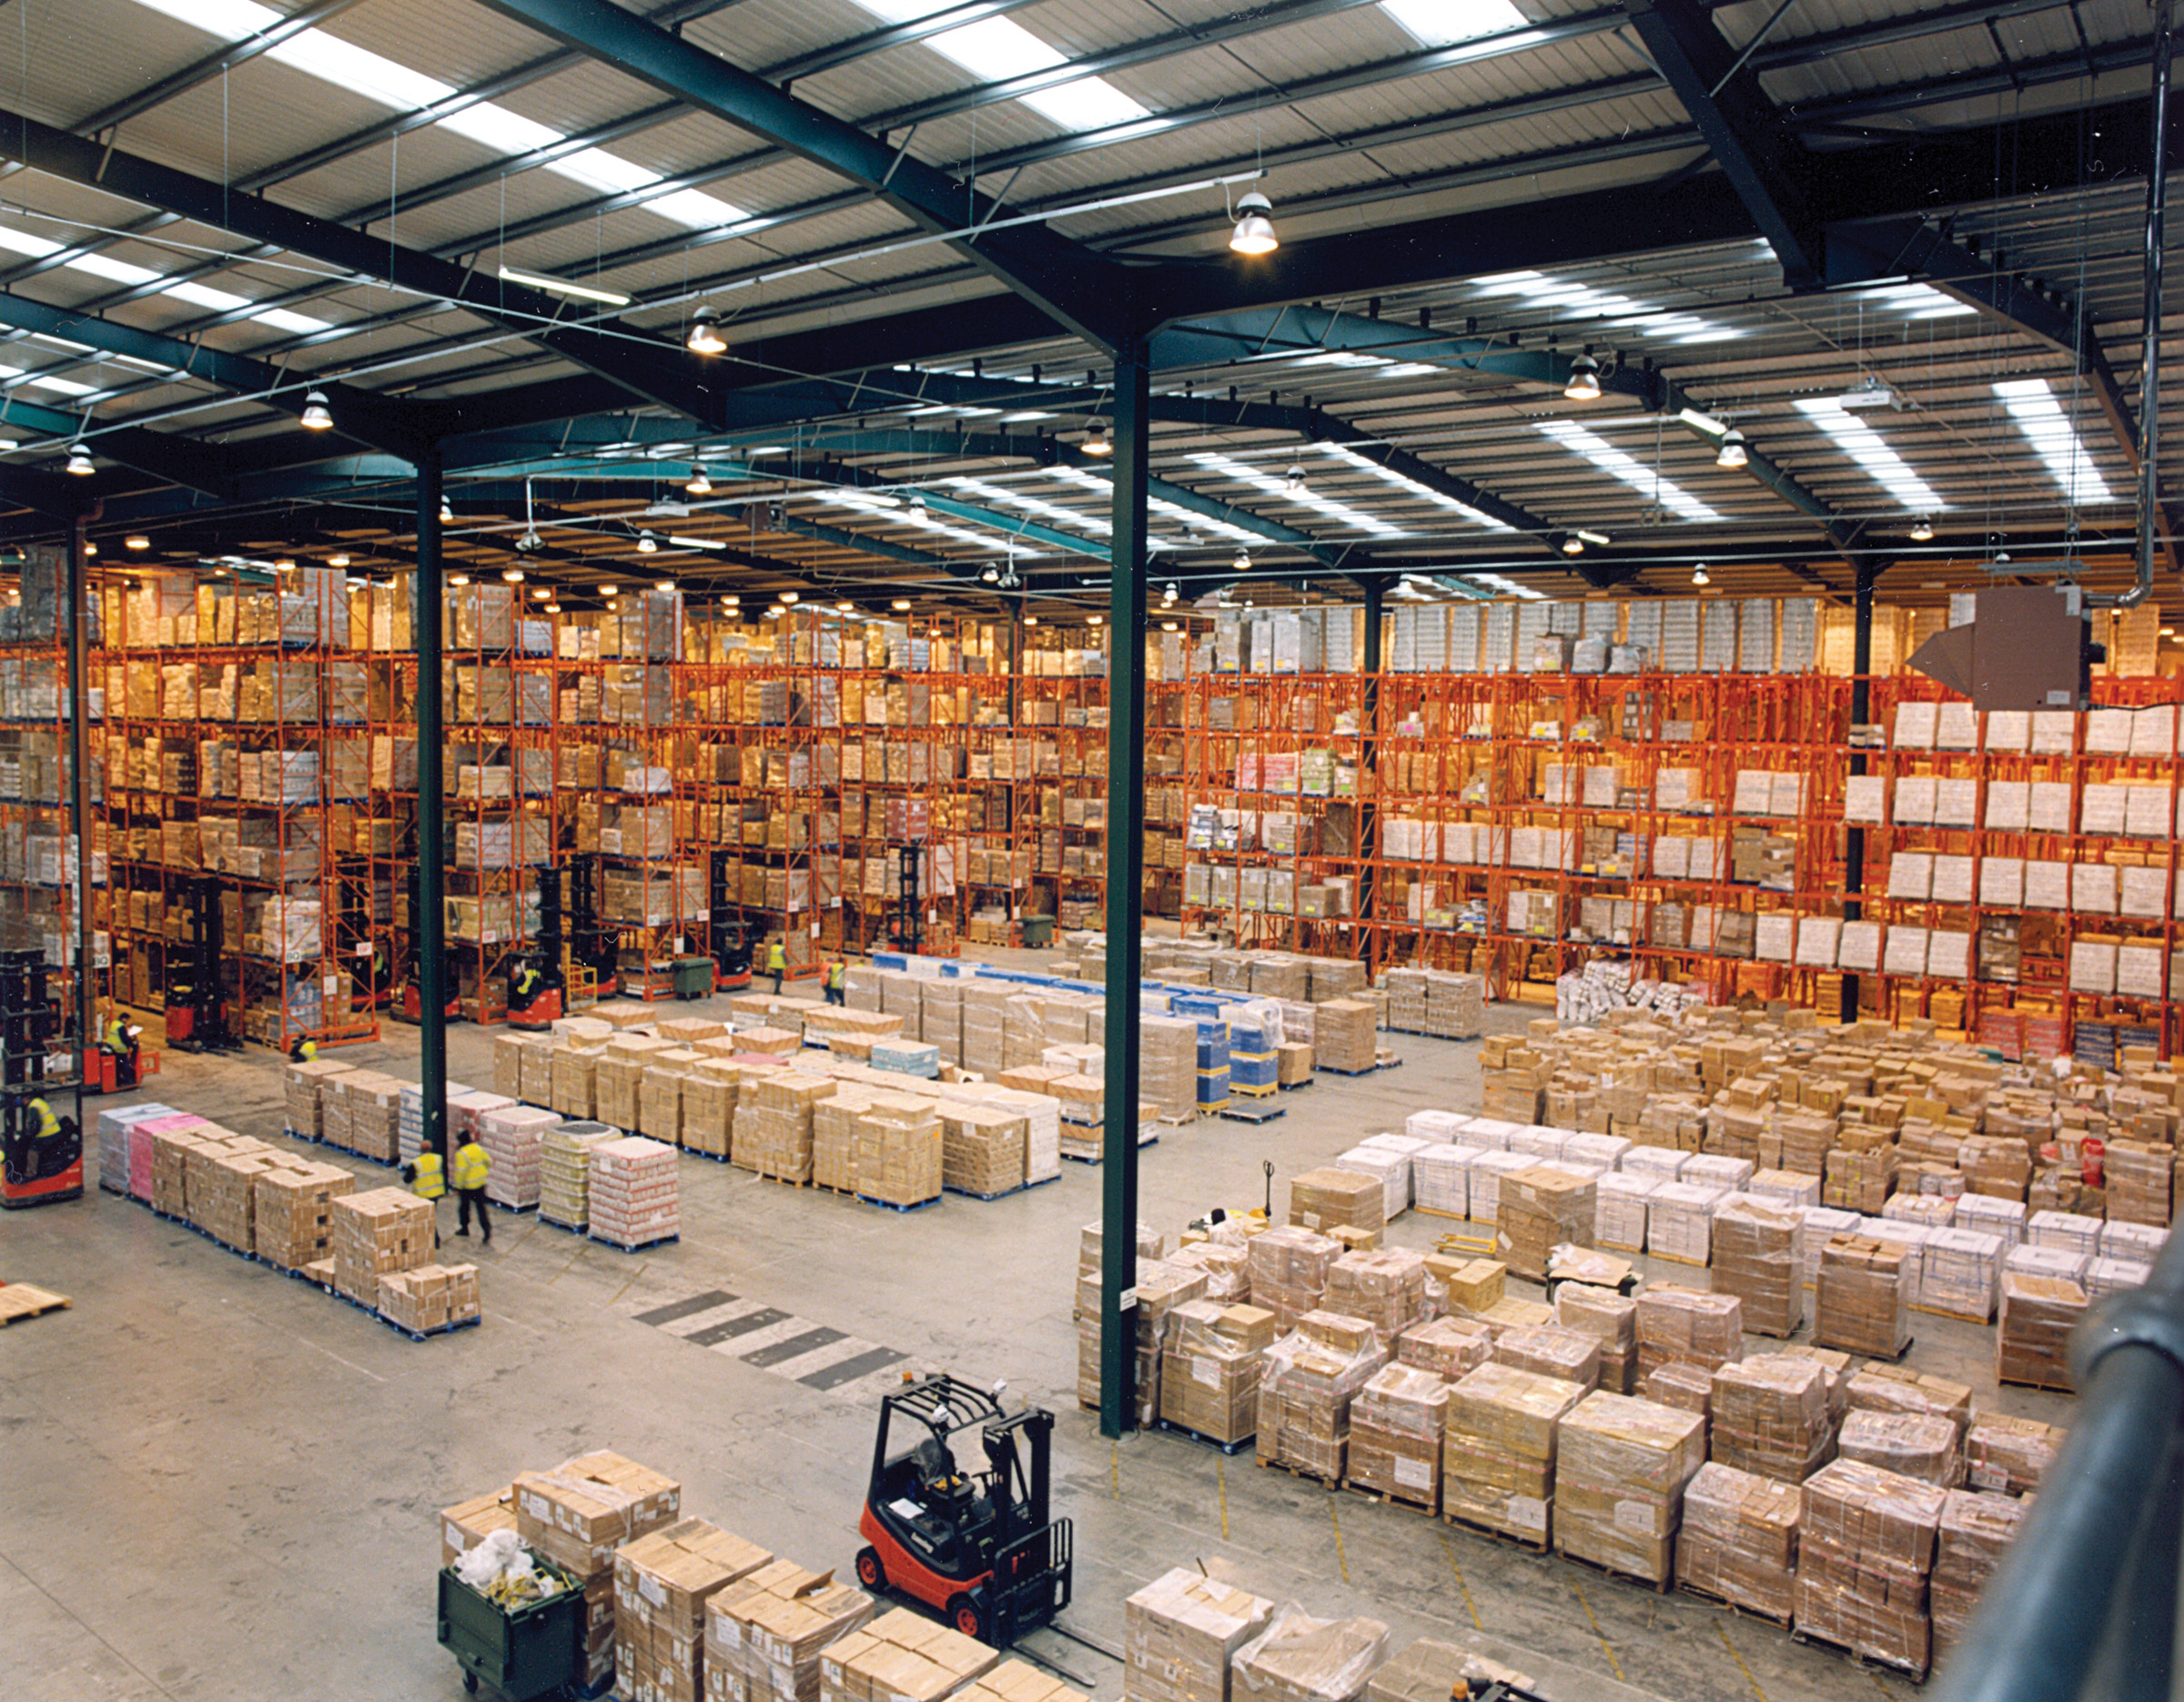 Distribution center (Credit: WikiMedia Commons/Axidasman)